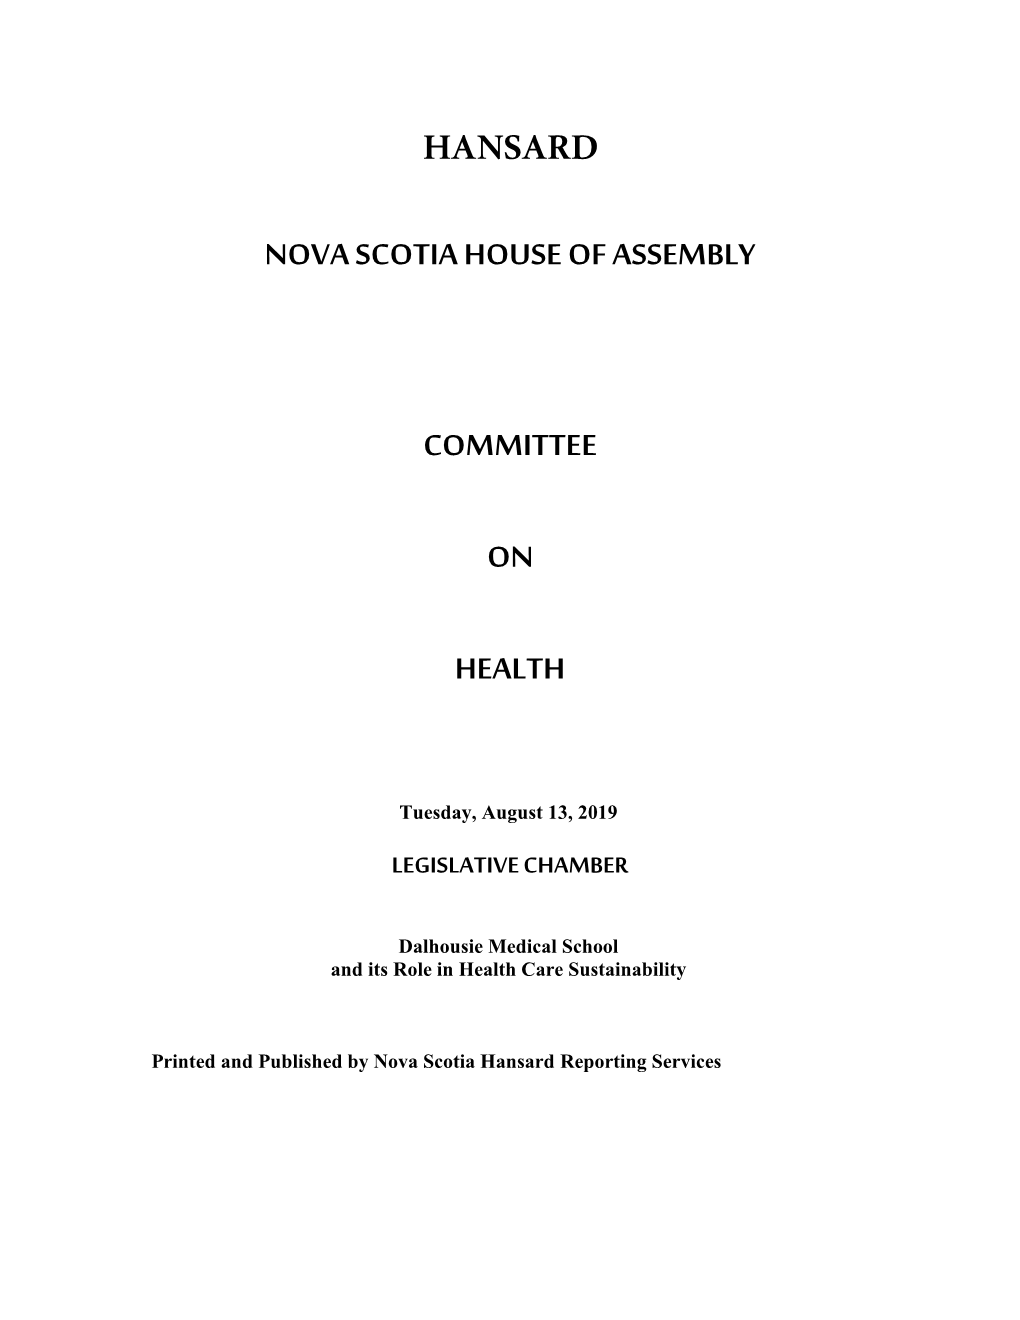 Health Committee Backup